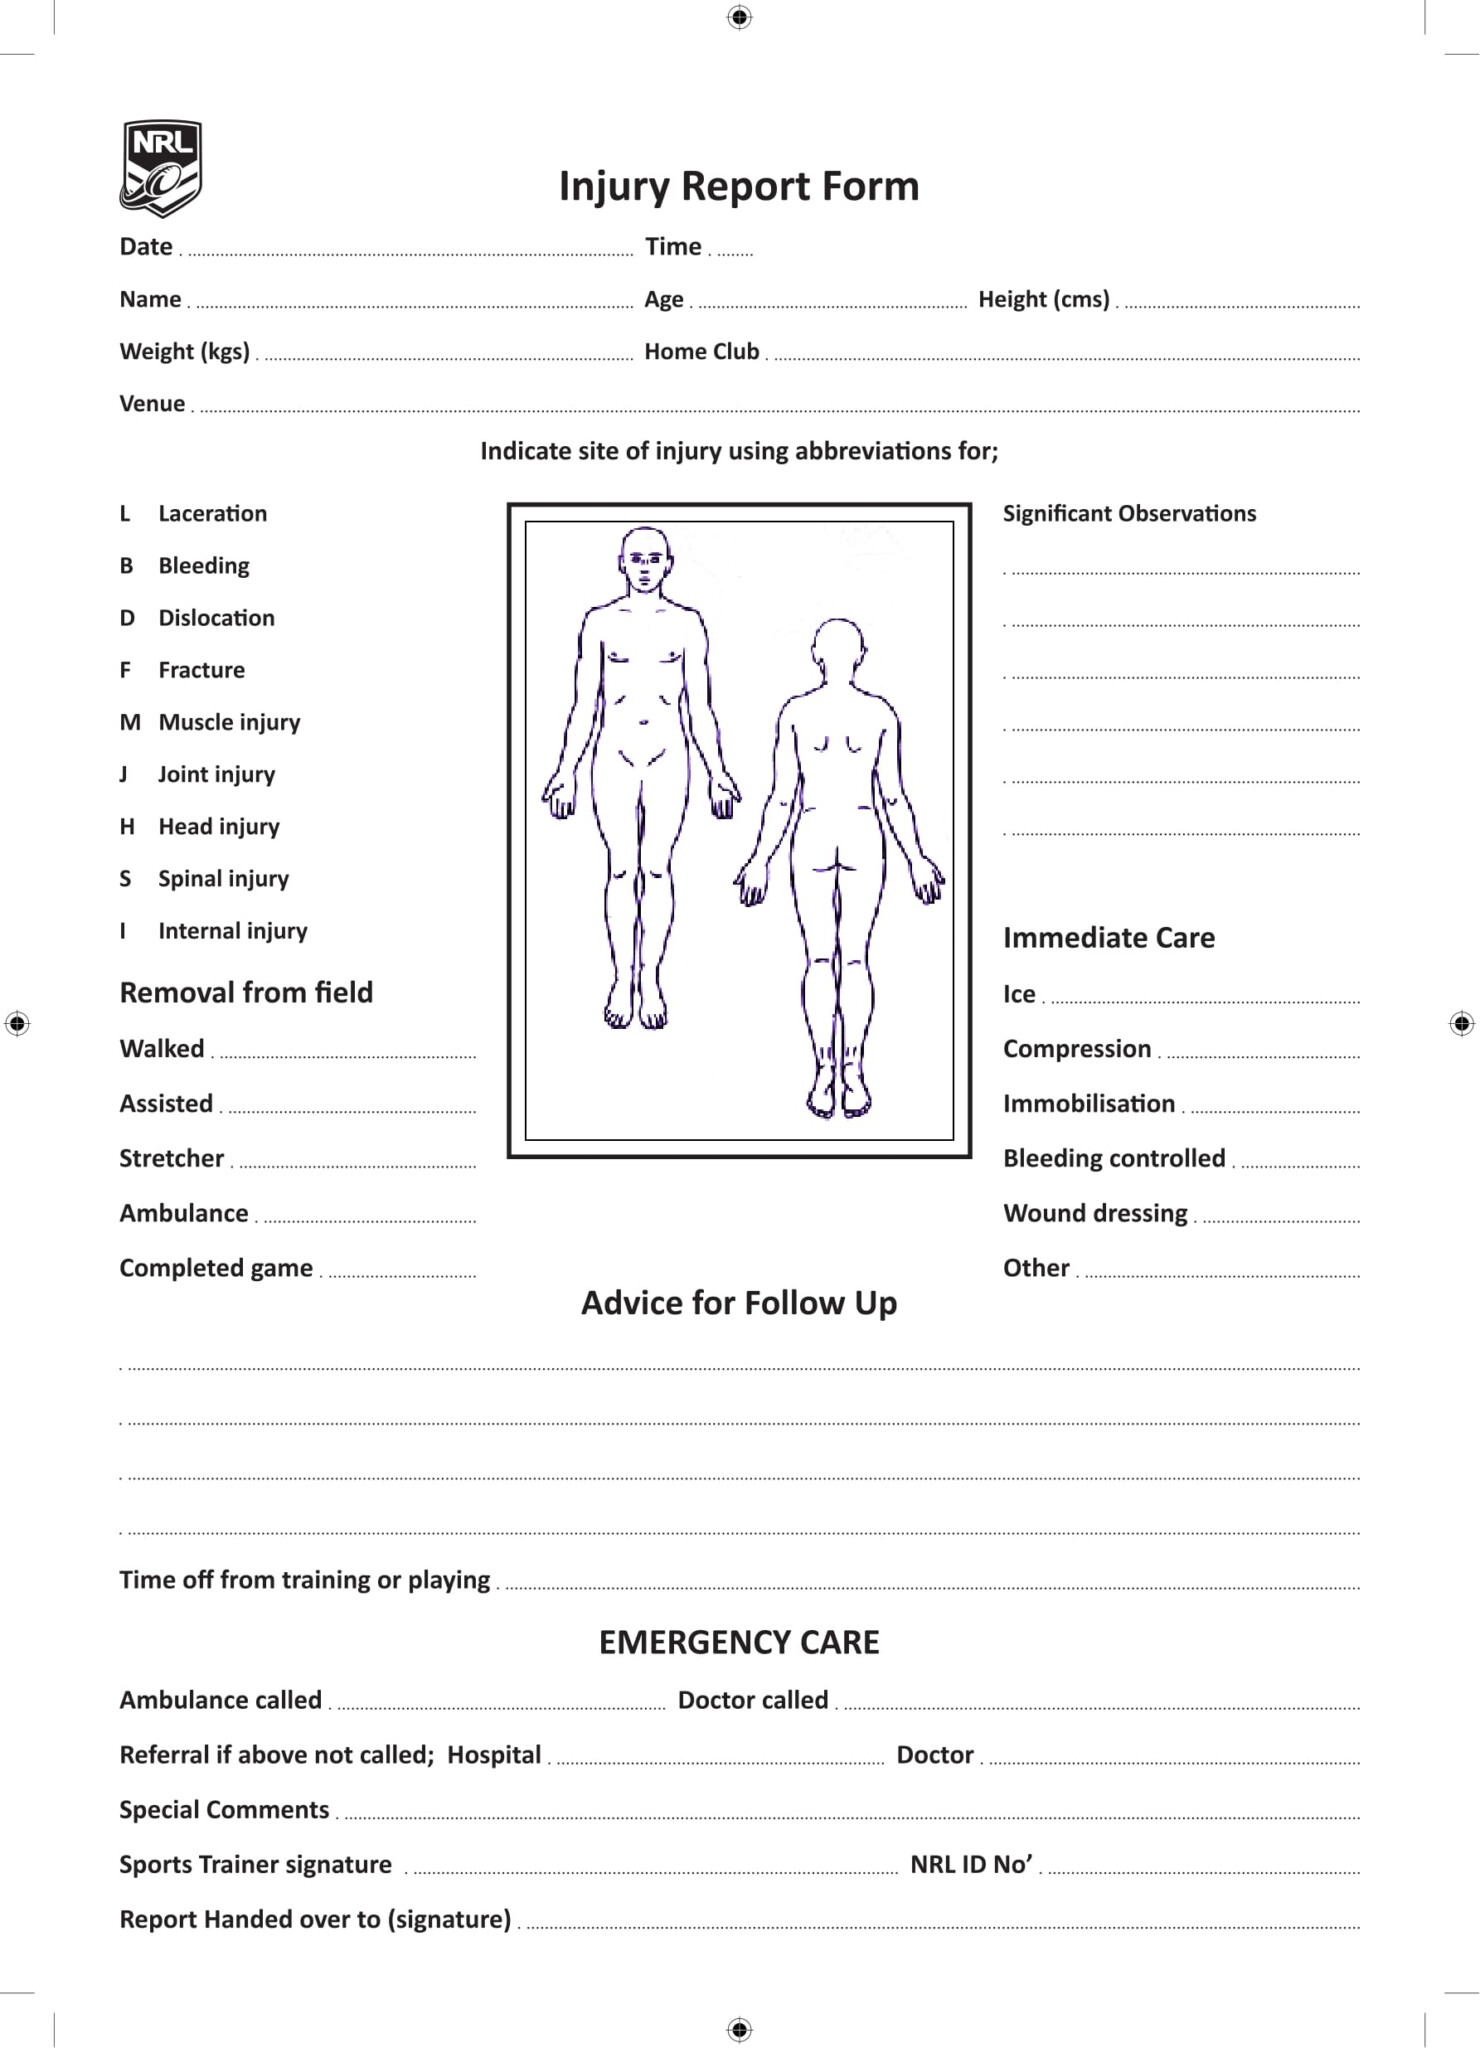 Injury Report Form Example ReportForm net